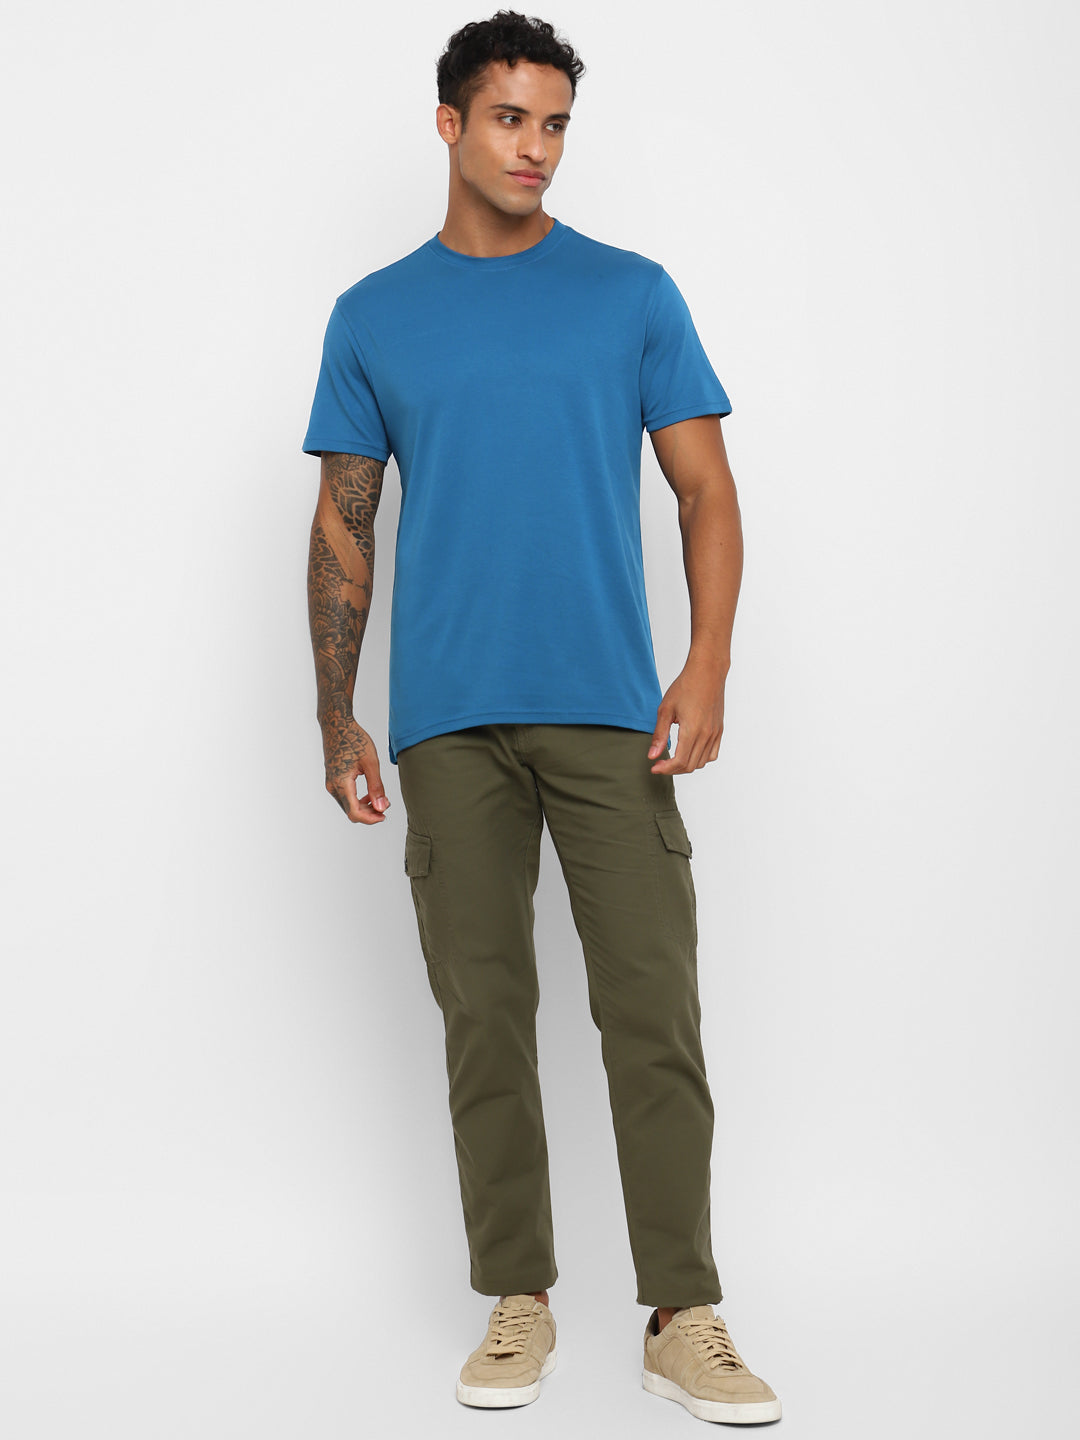 Supima Cotton Round Neck T-Shirt for Men - Sea Blue